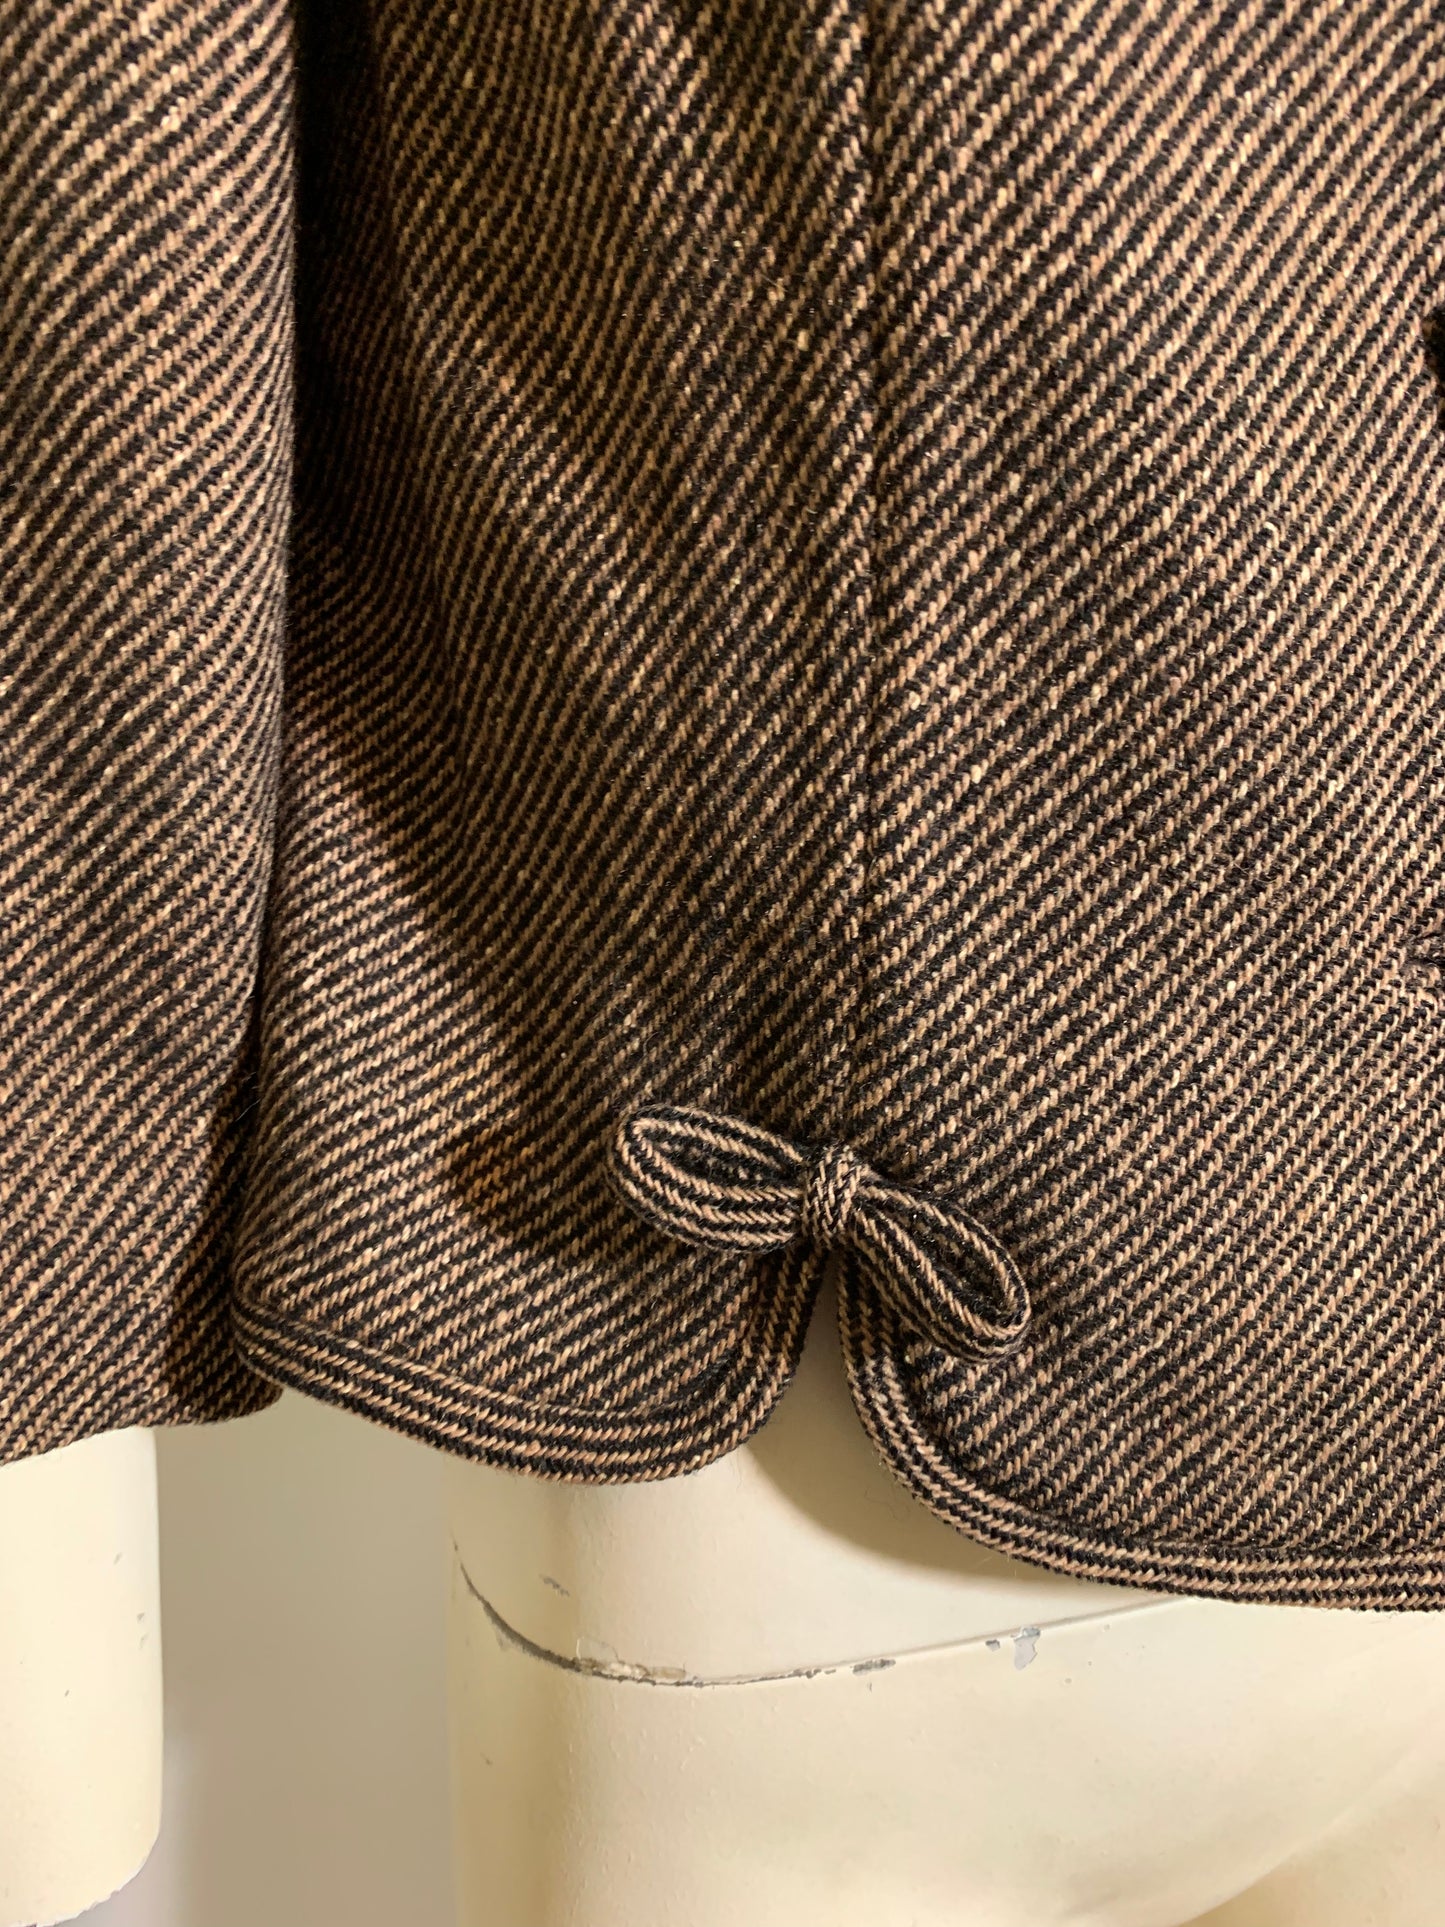 Textured Bark Brown Wool Cropped Jacket circa 1960s